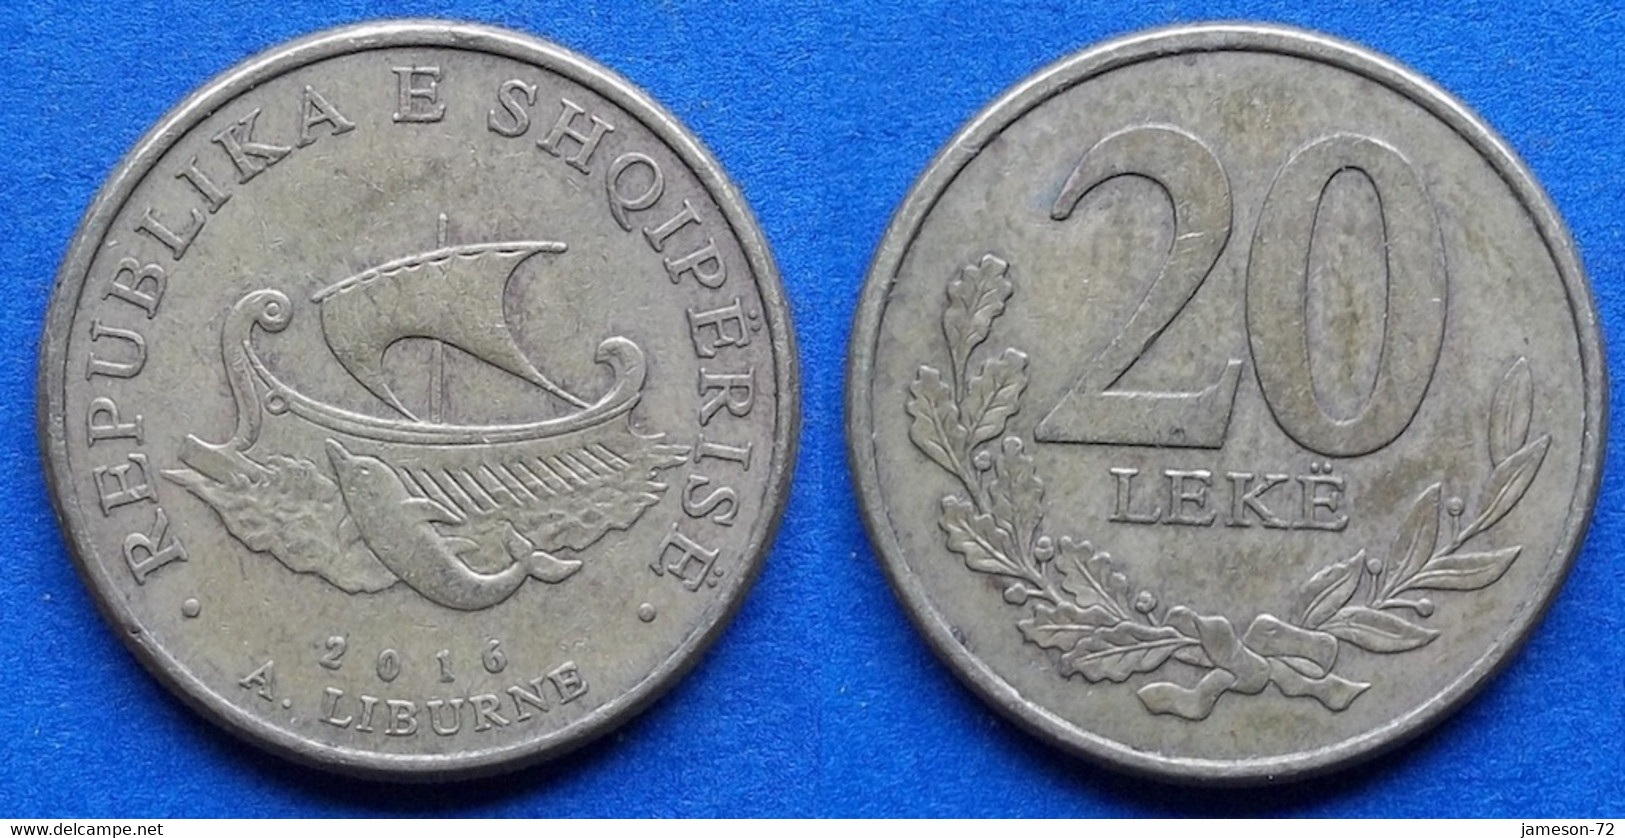 ALBANIA - 20 Leke 2016 "Liburne" KM# 78a Republic (1996) - Edelweiss Coins - Albania